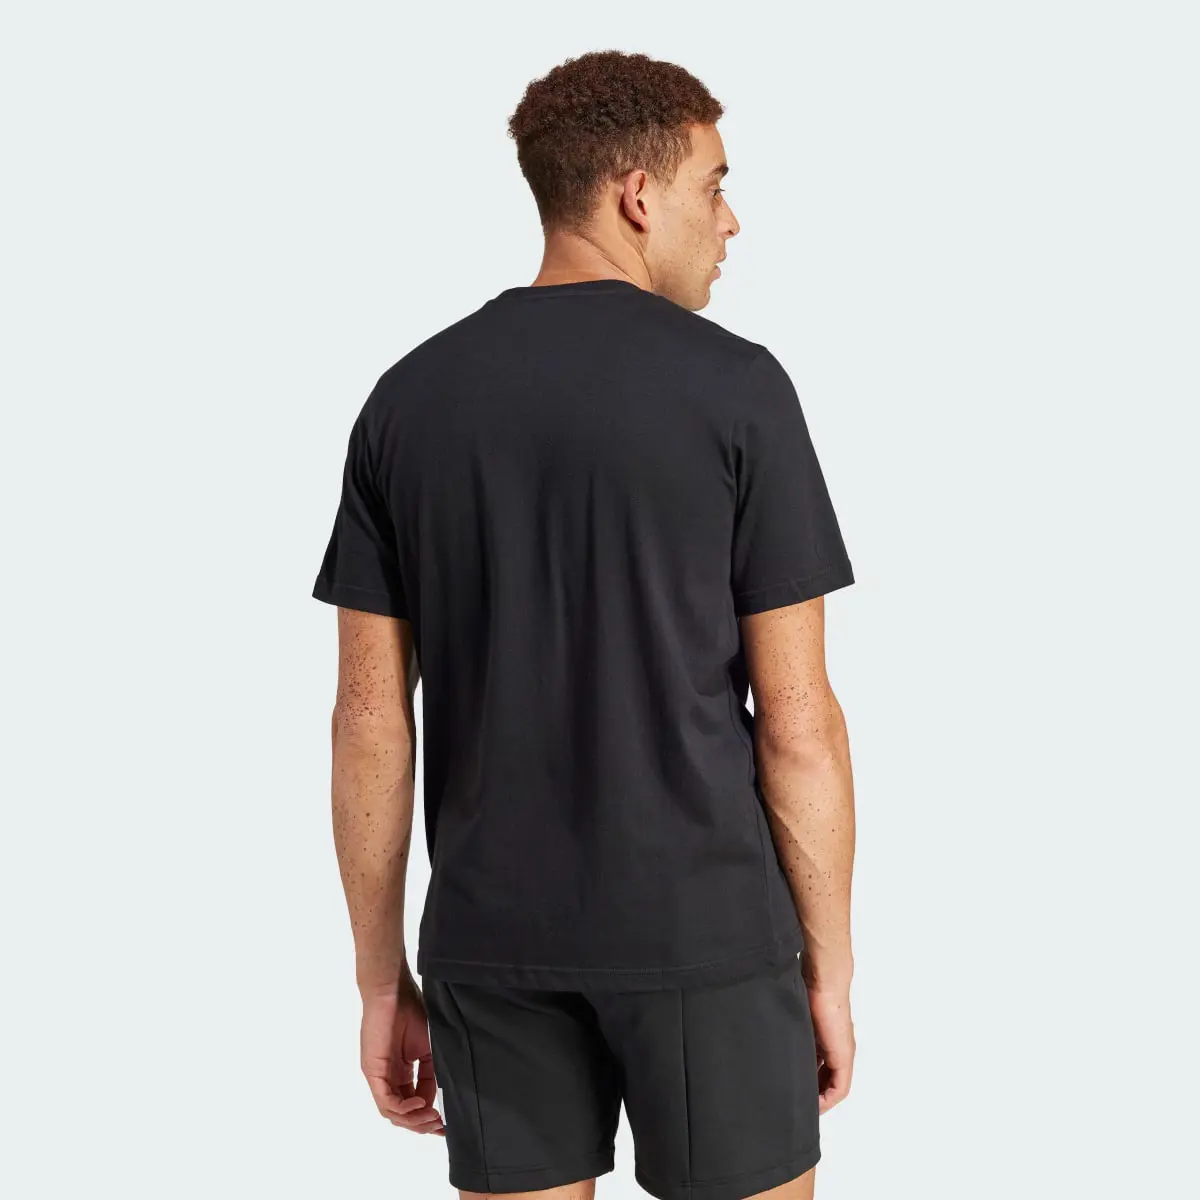 Adidas Camo Linear Graphic T-Shirt. 3